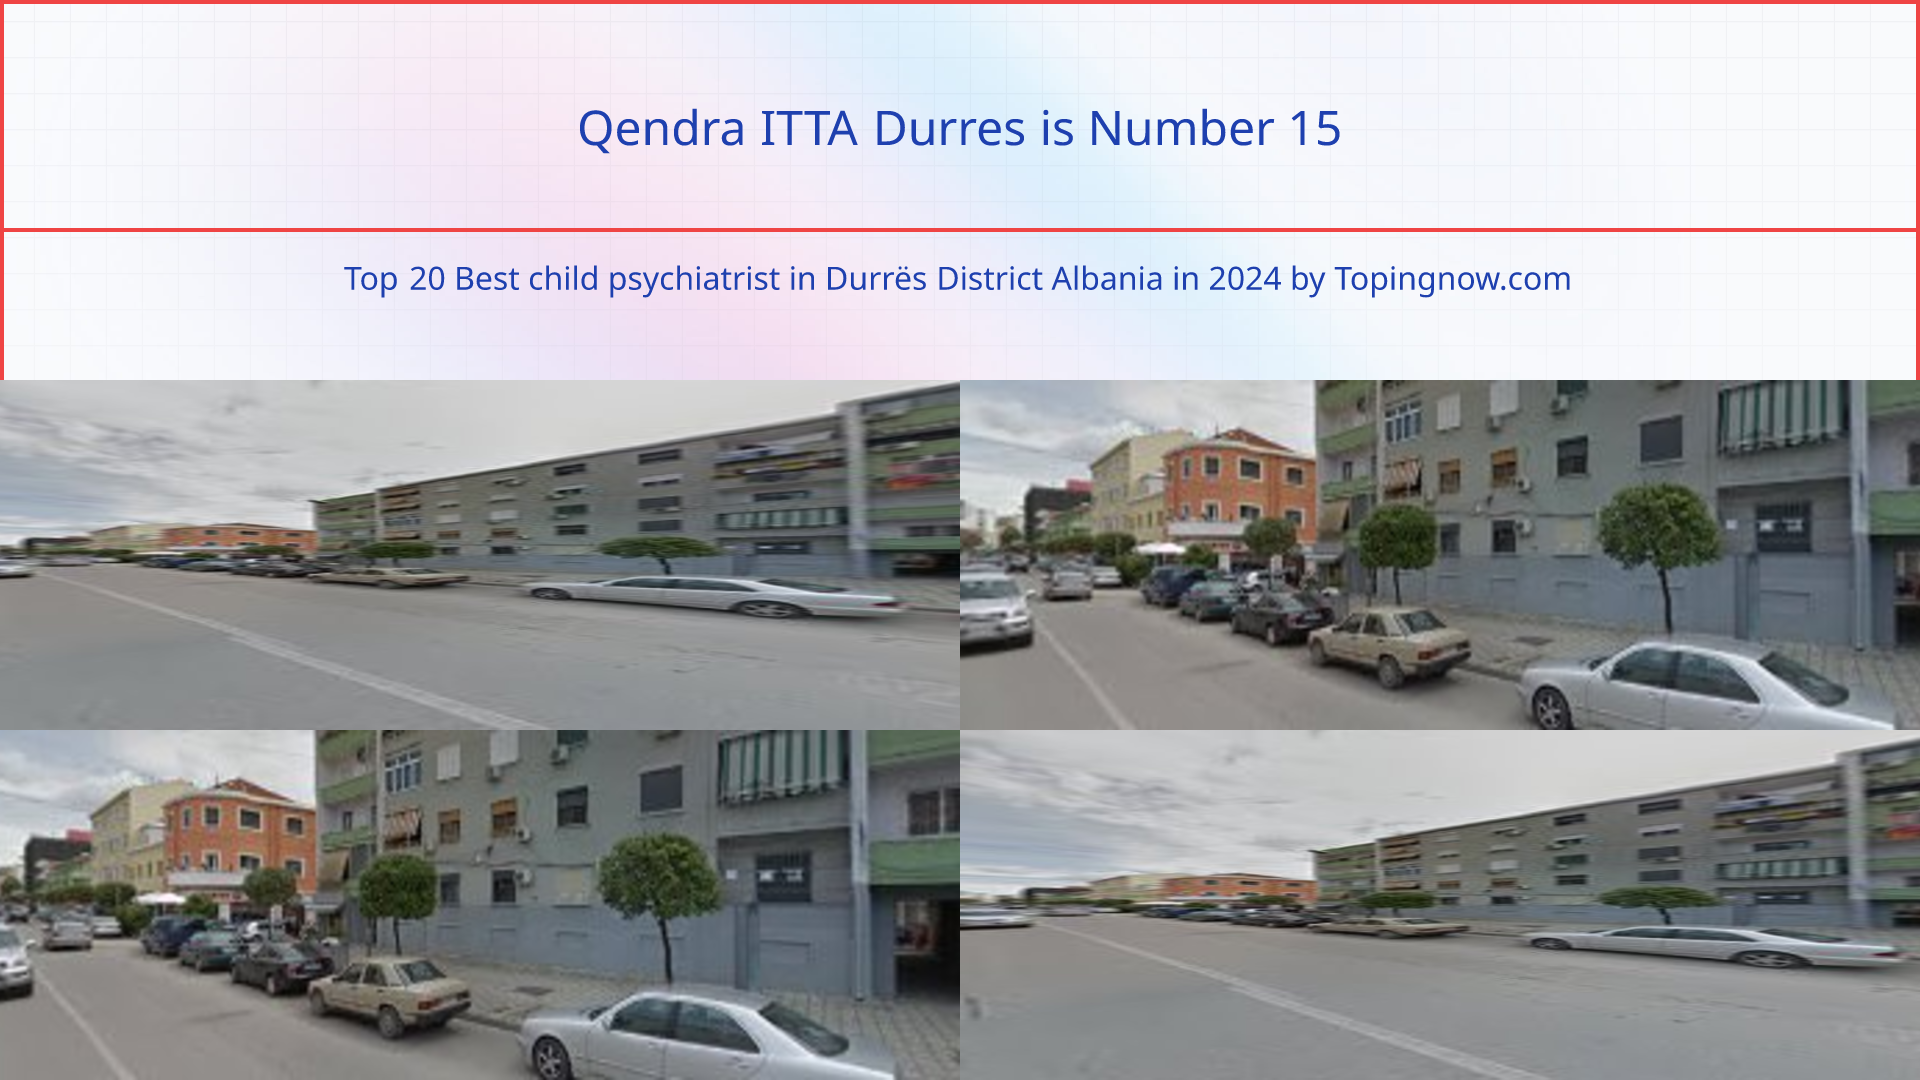 Qendra ITTA Durres: Top 20 Best child psychiatrist in Durrës District Albania in 2024